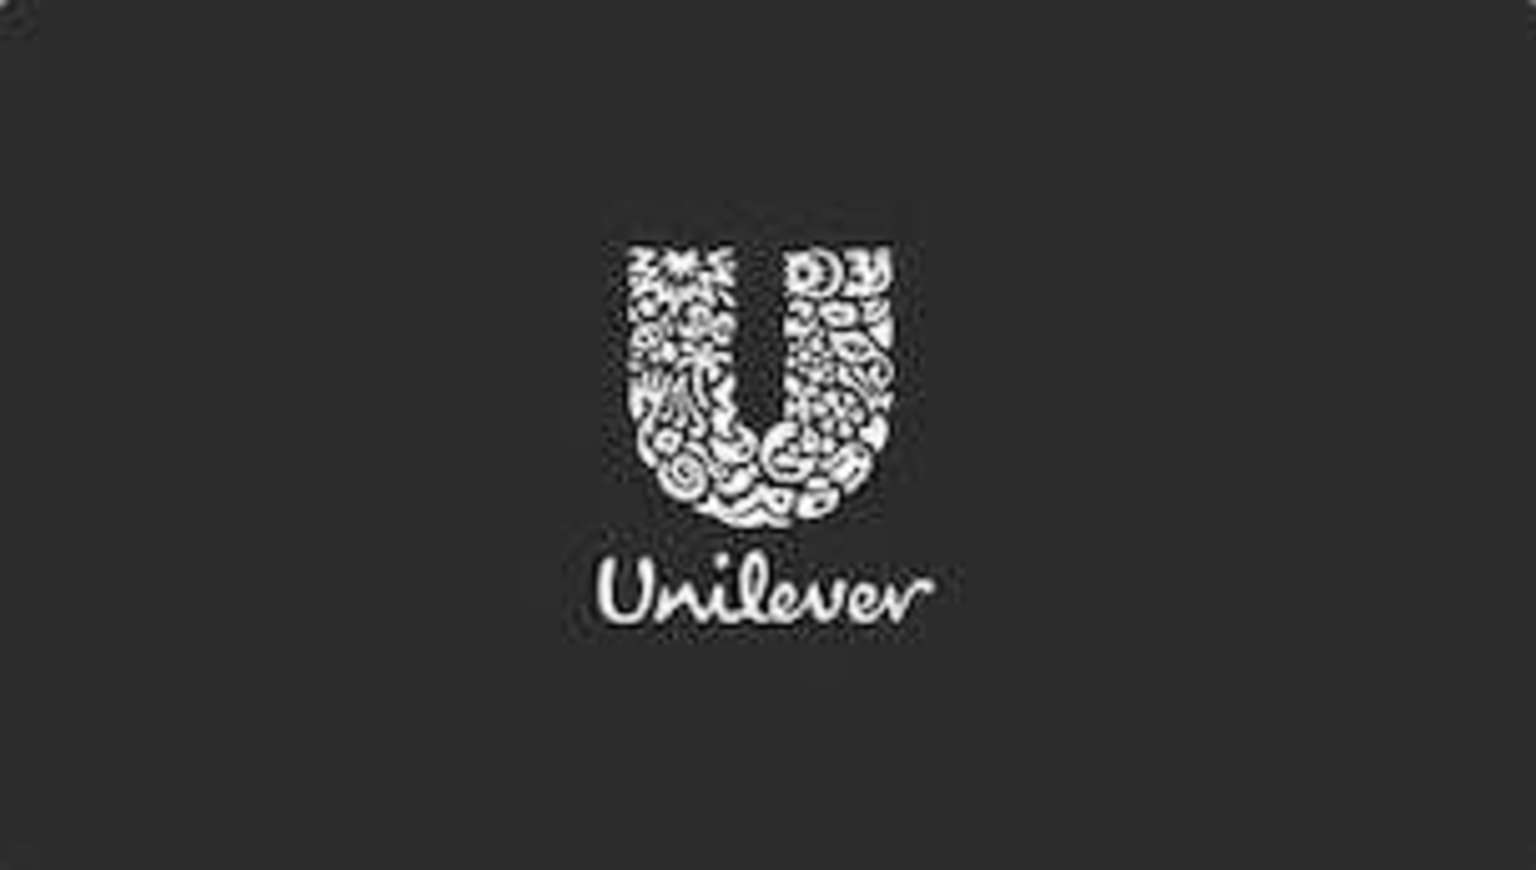 Read the Unilever customer story